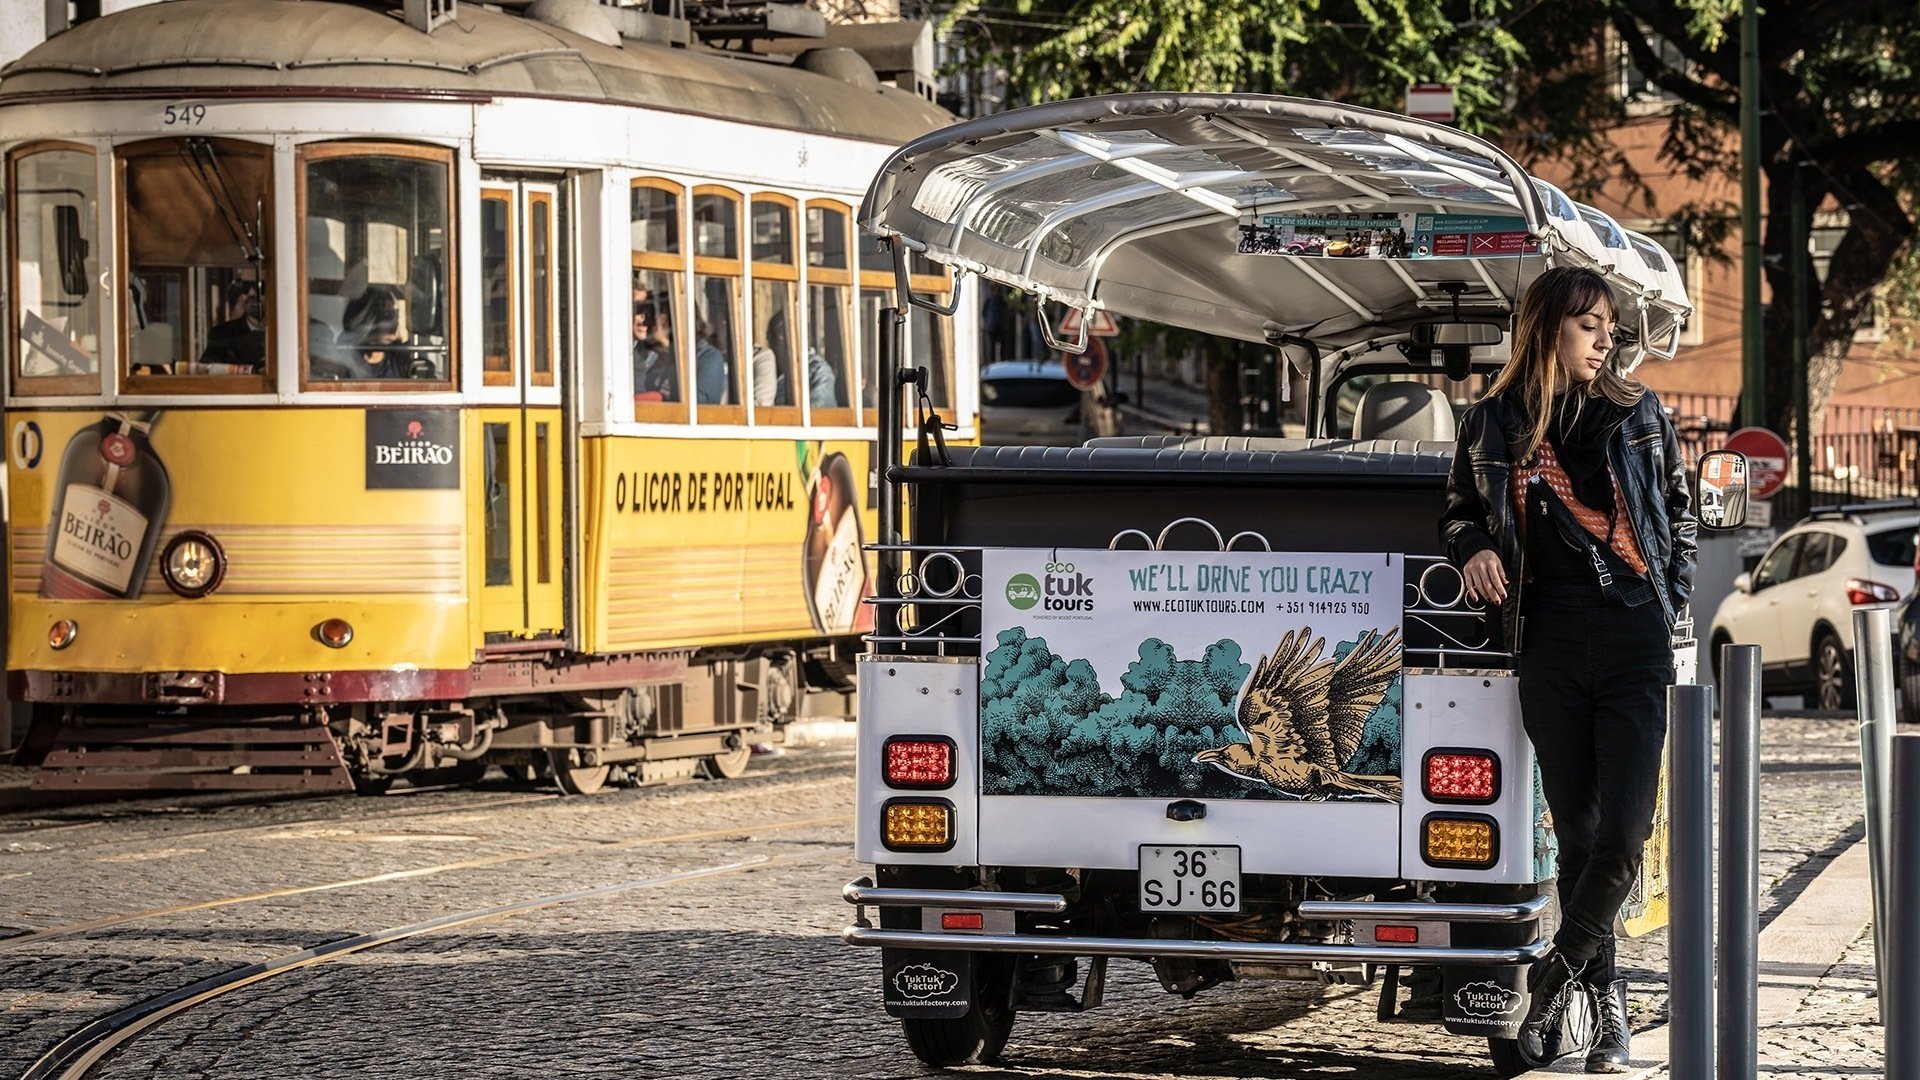 Discover Lisbon through the famous 28 tram